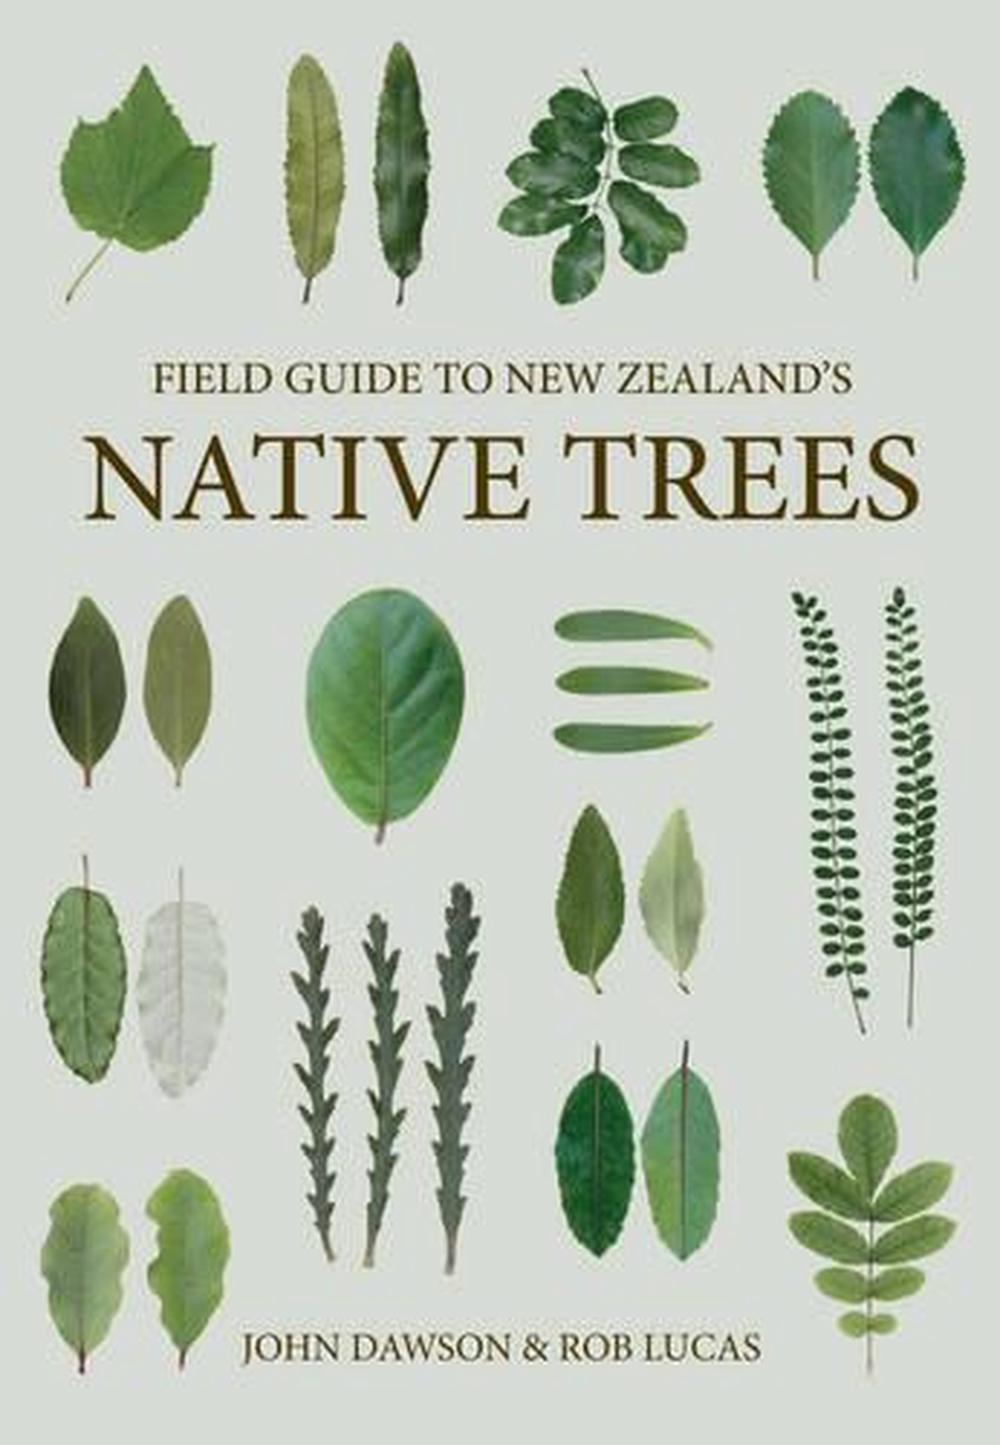 A Field Guide to Imaginary Trees by Joseph Bulgatz